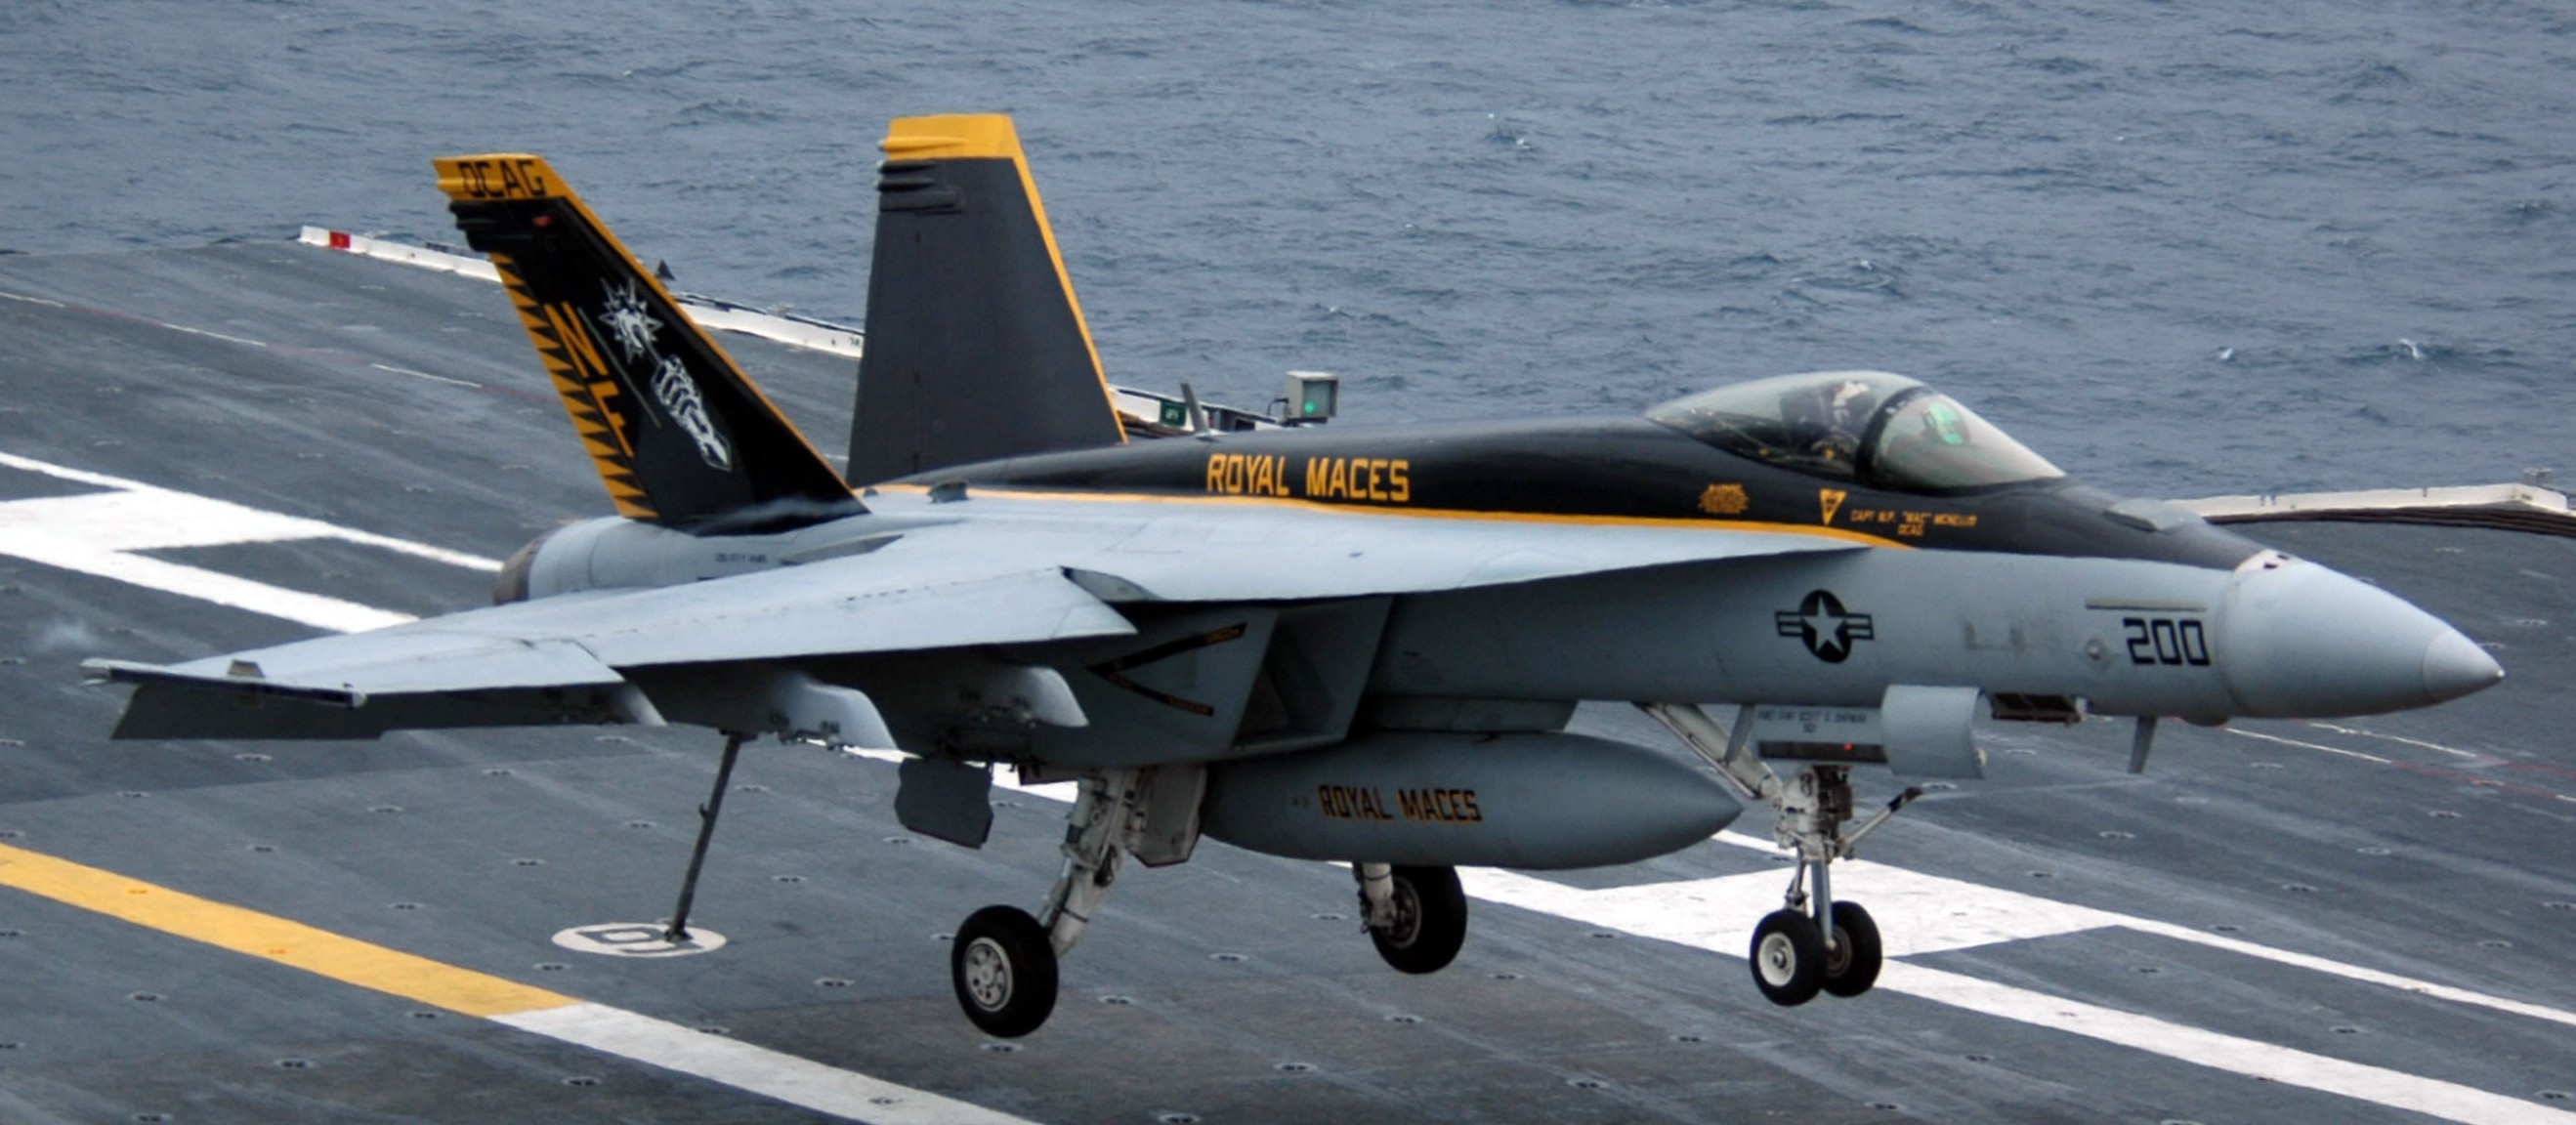 vfa-27 royal maces strike fighter squadron f/a-18e super hornet cv-63 uss kitty hawk cvw-5 us navy 141p